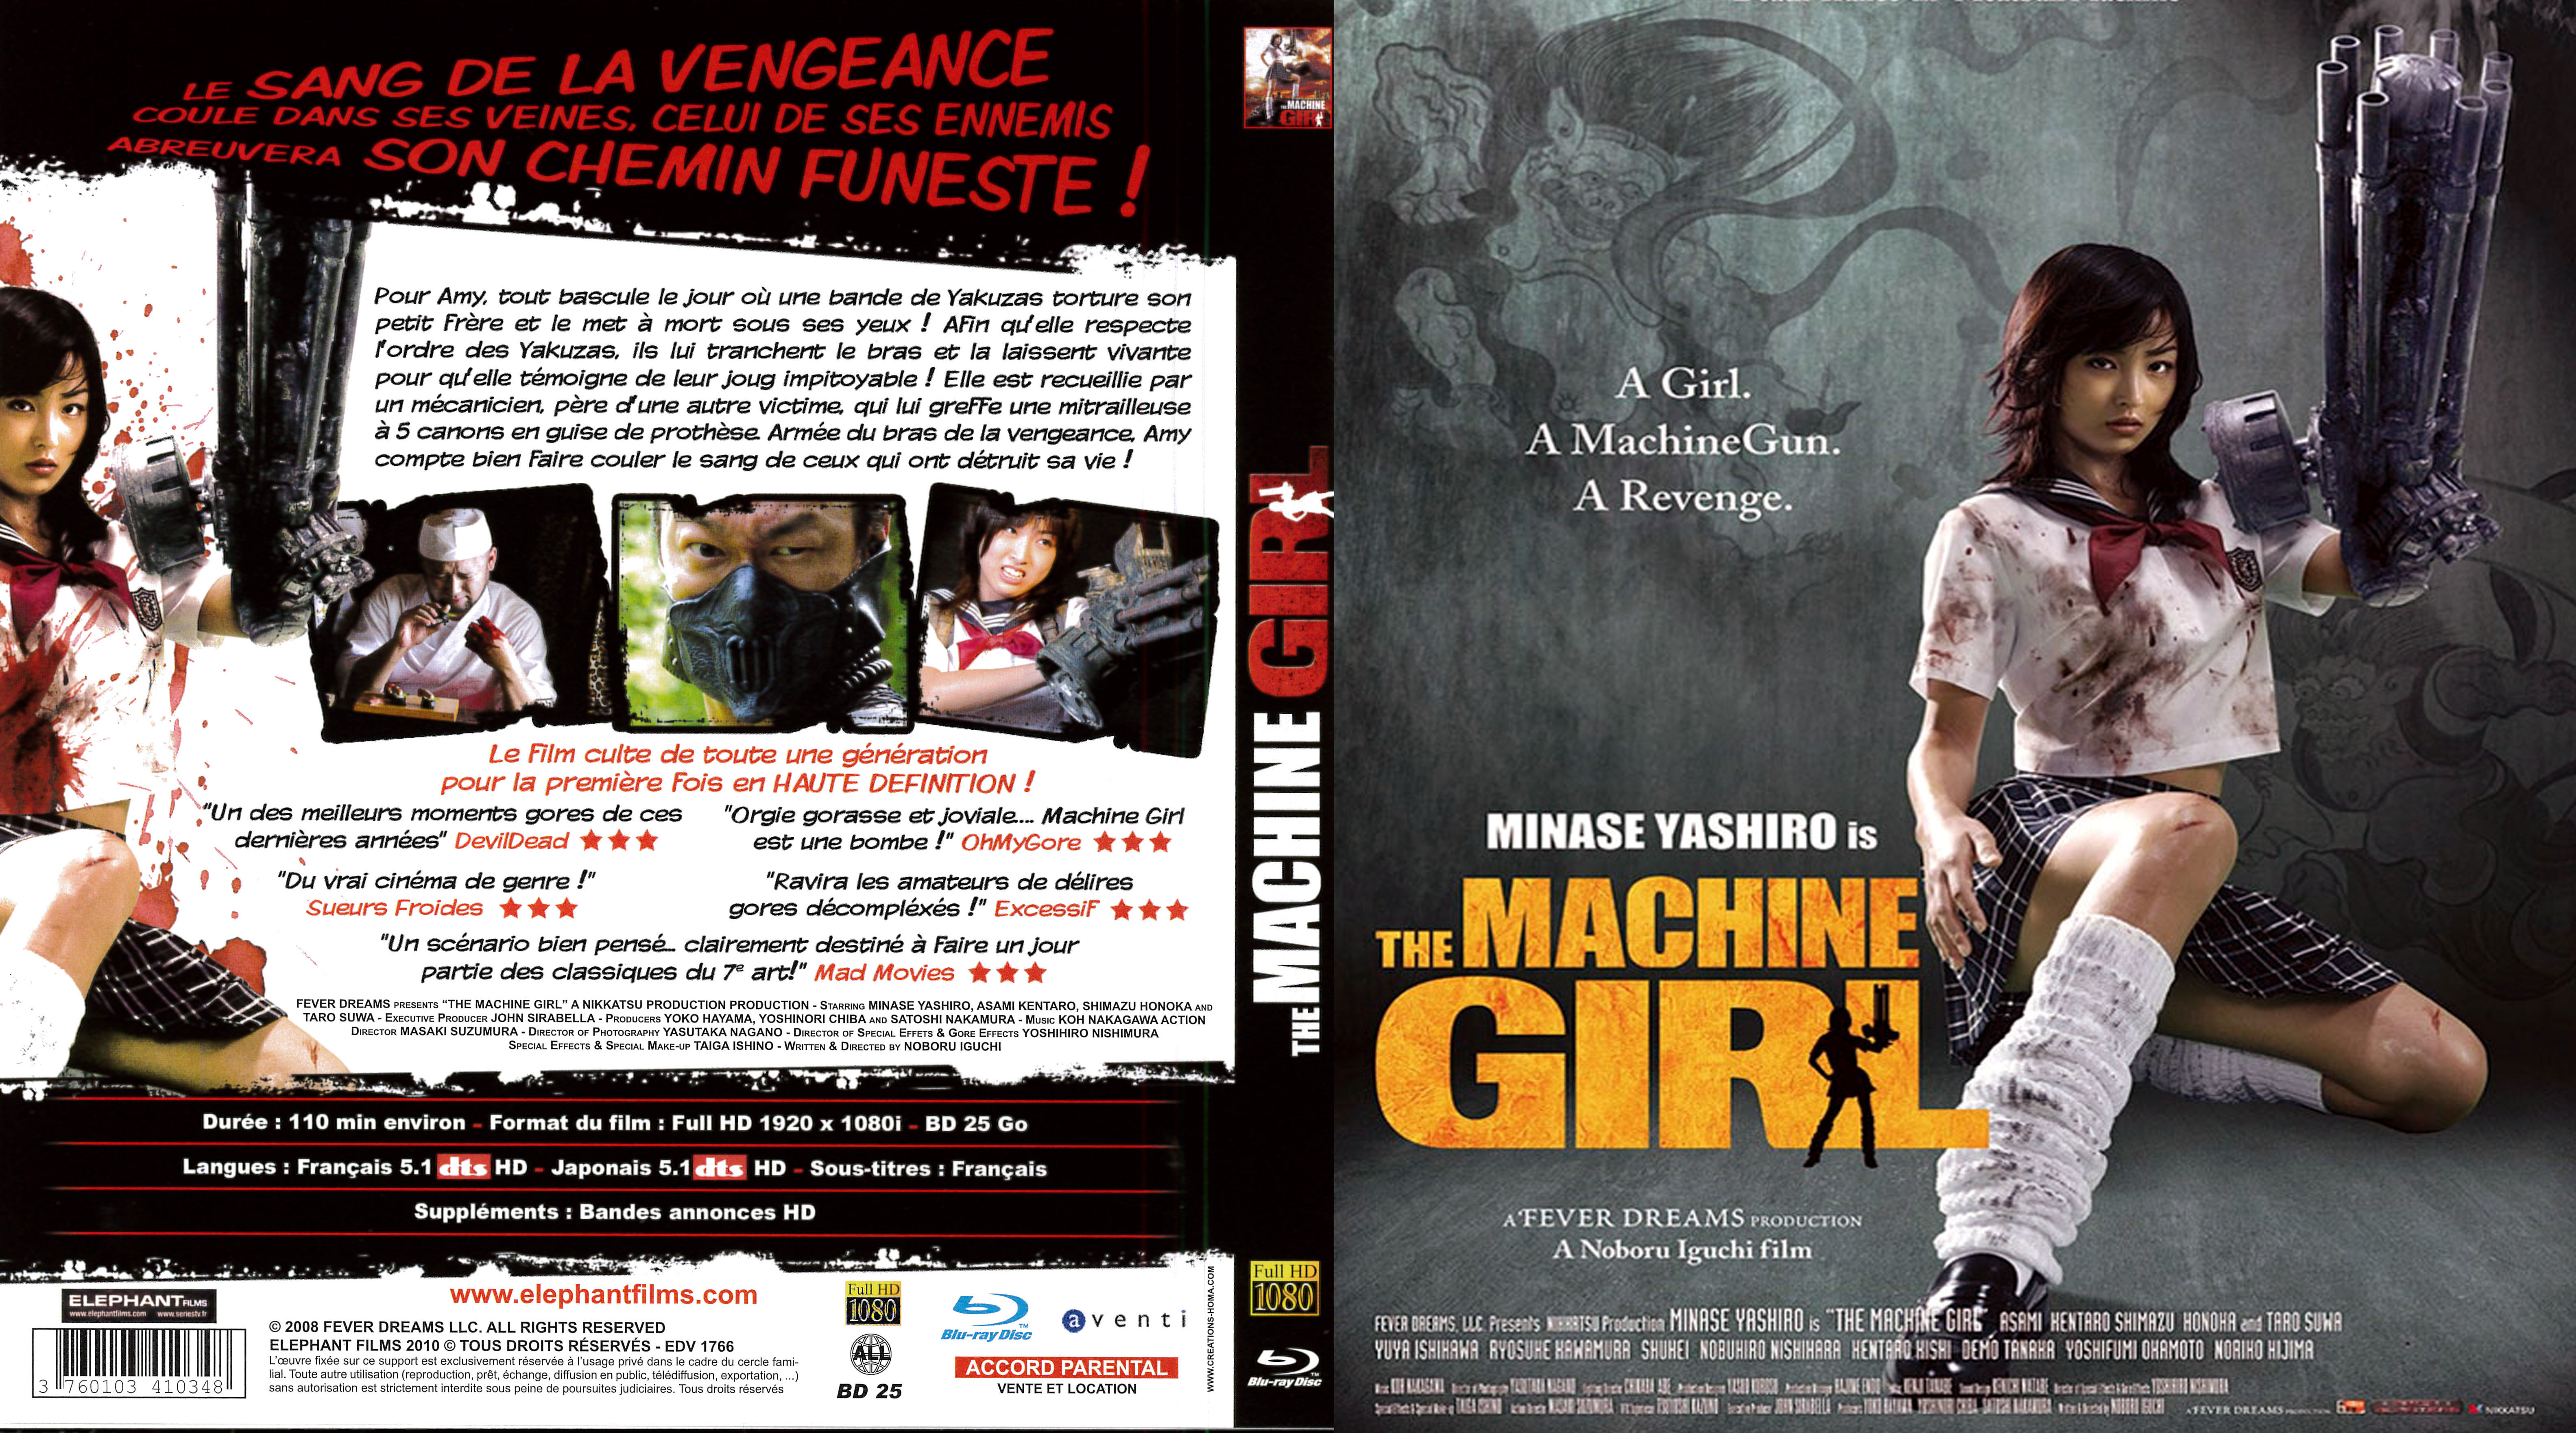 Jaquette DVD The machine girl custom (BLU-RAY)